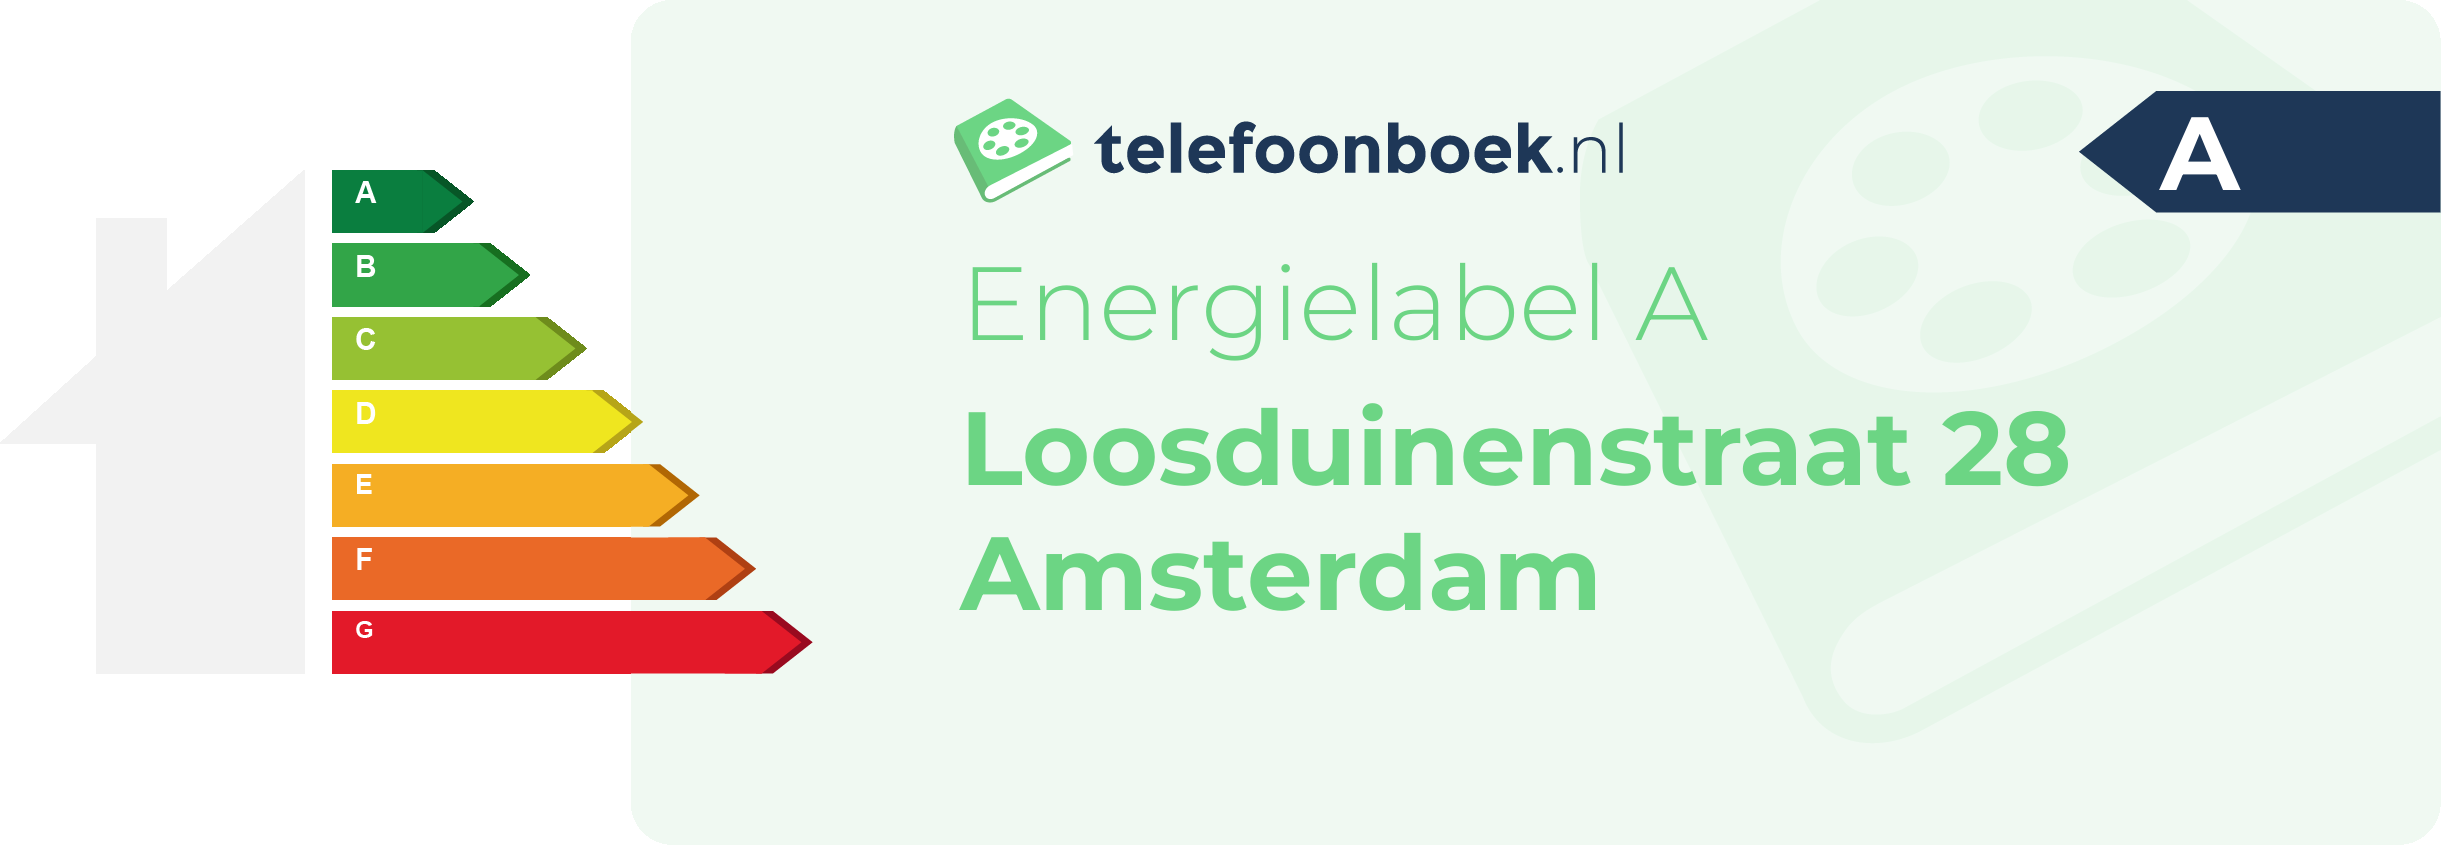 Energielabel Loosduinenstraat 28 Amsterdam